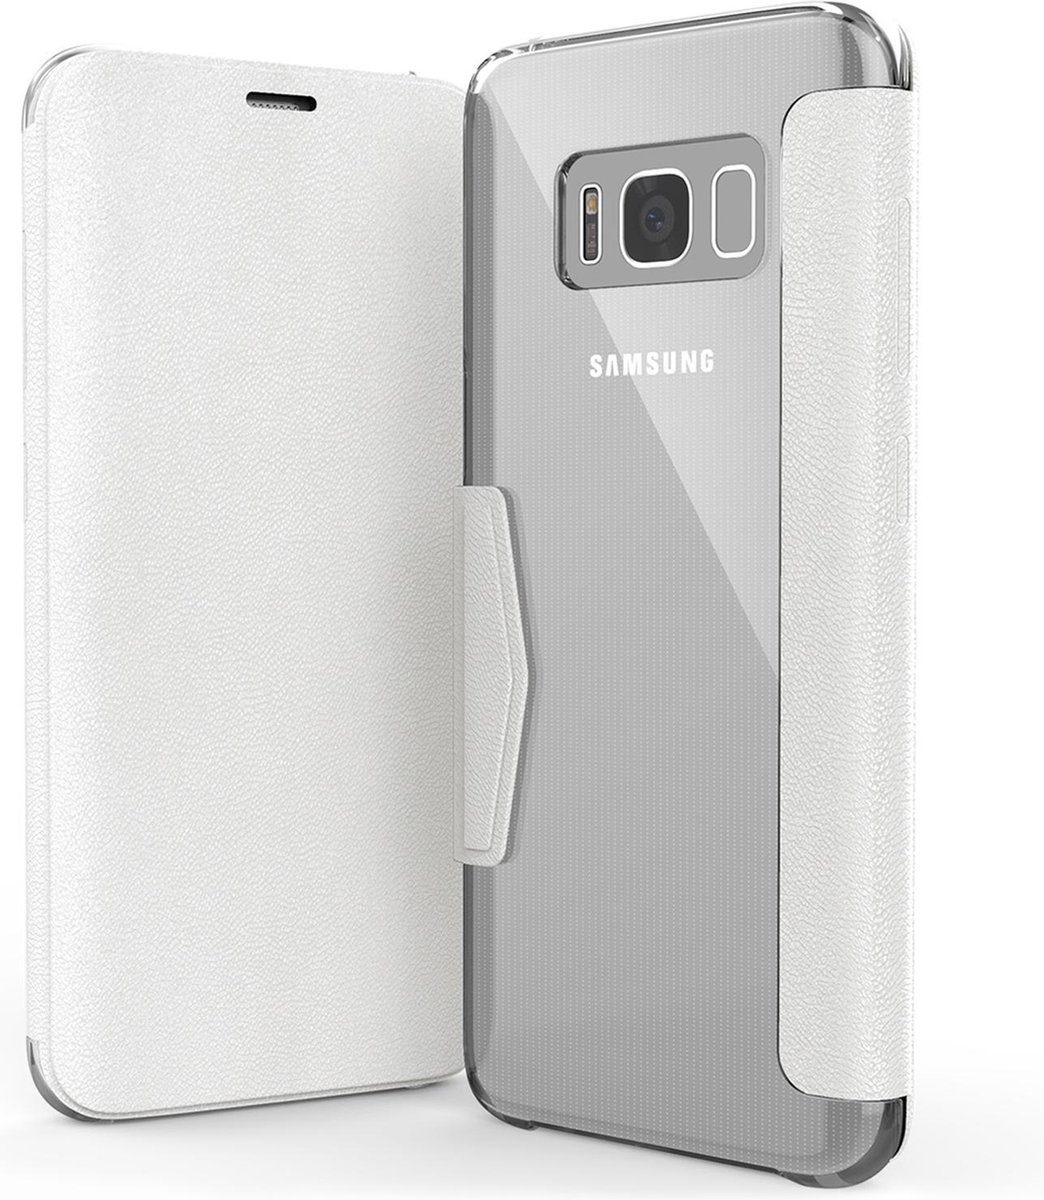 X-Doria Booklet engage - wit - voor Samsung Galaxy S8